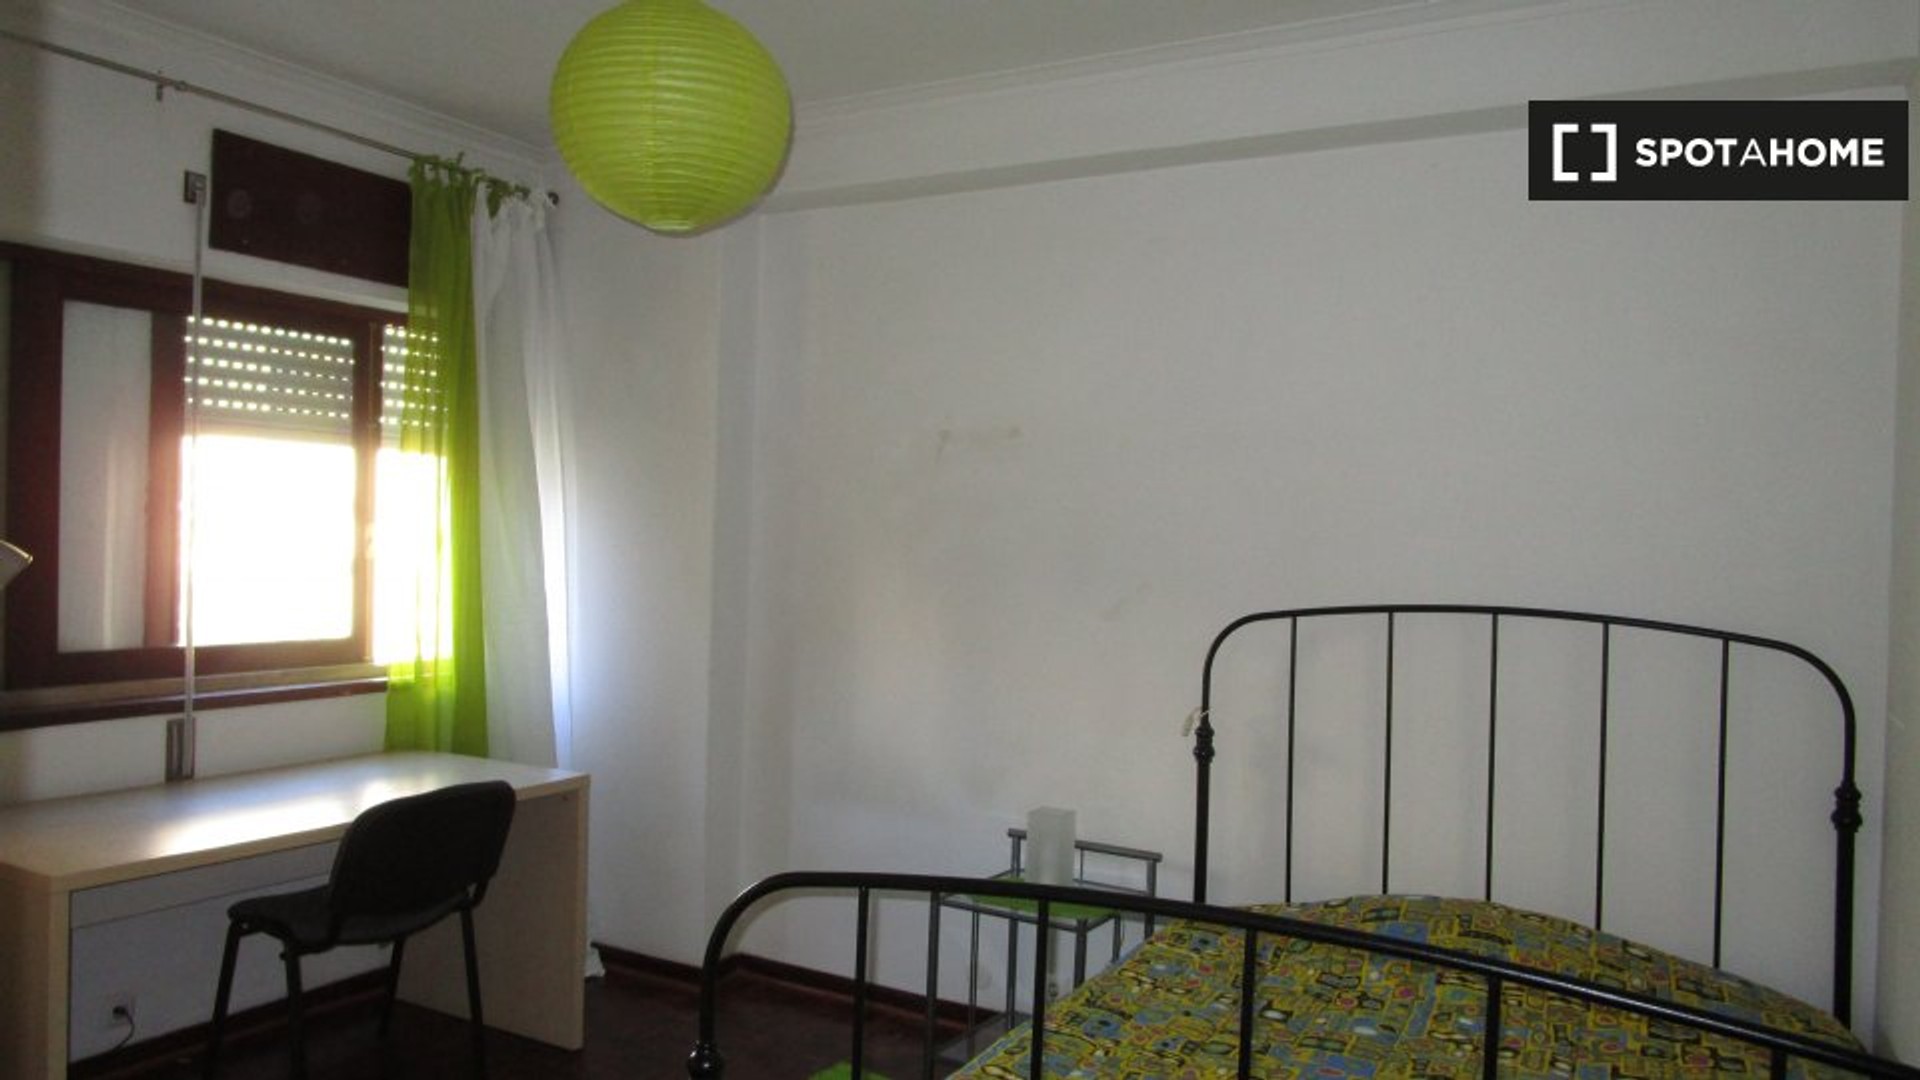 Cheap private room in Coimbra